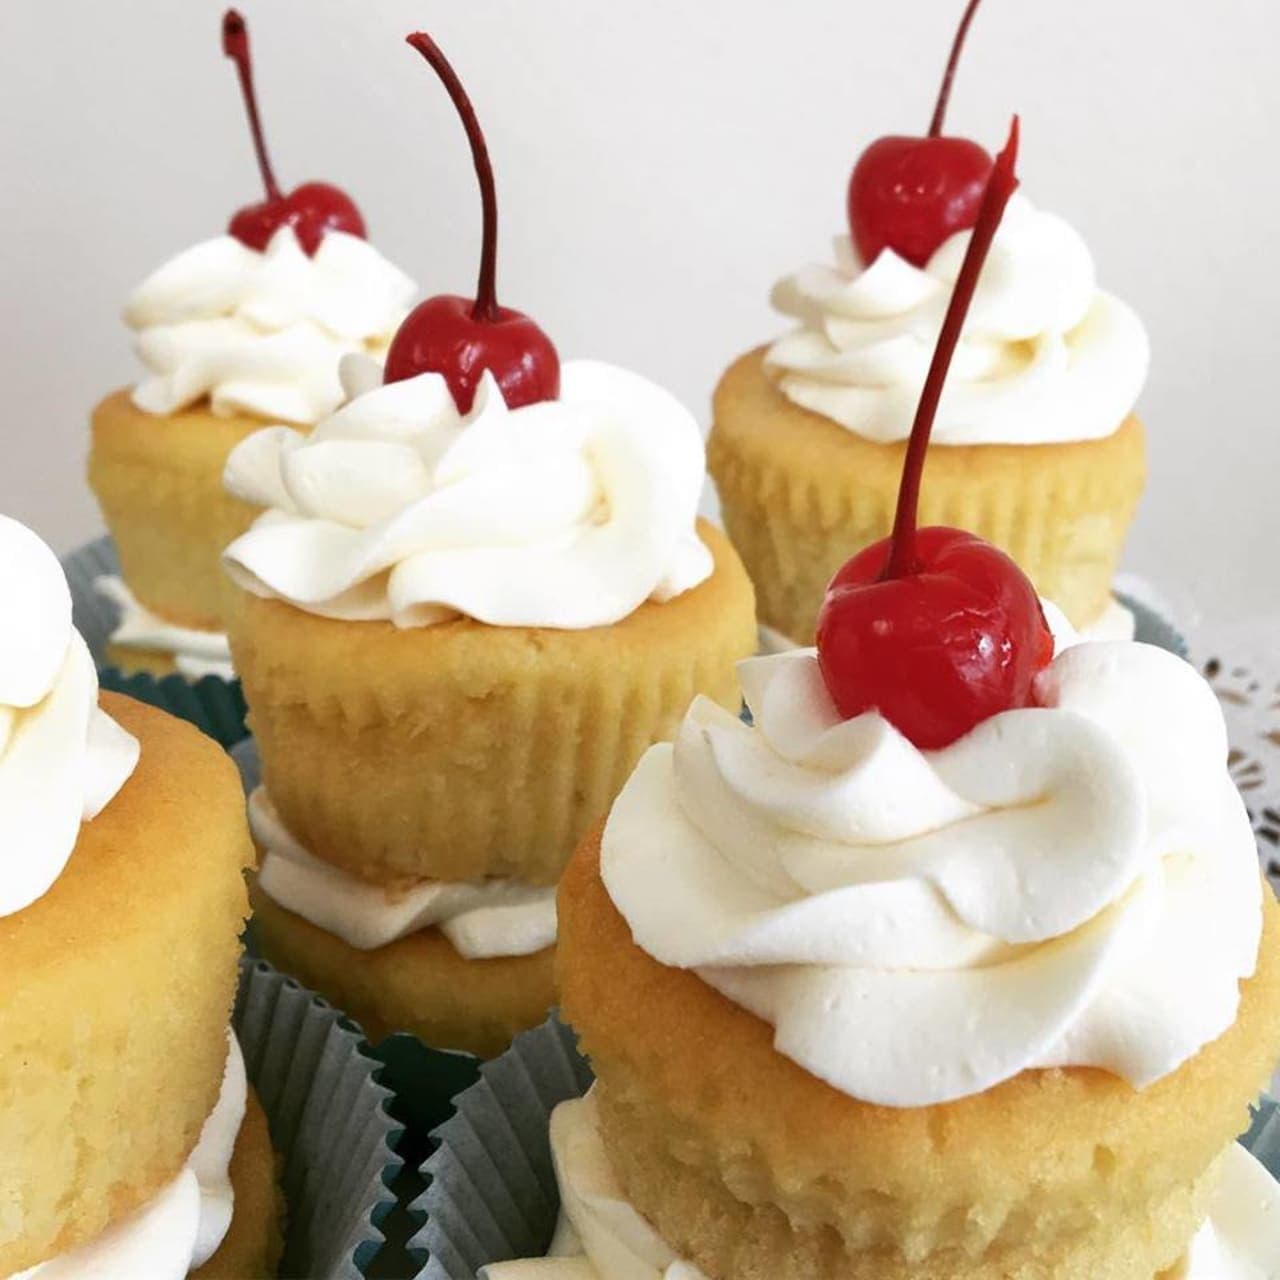 Vanilla Cream cupcakes from Baked Meringue.